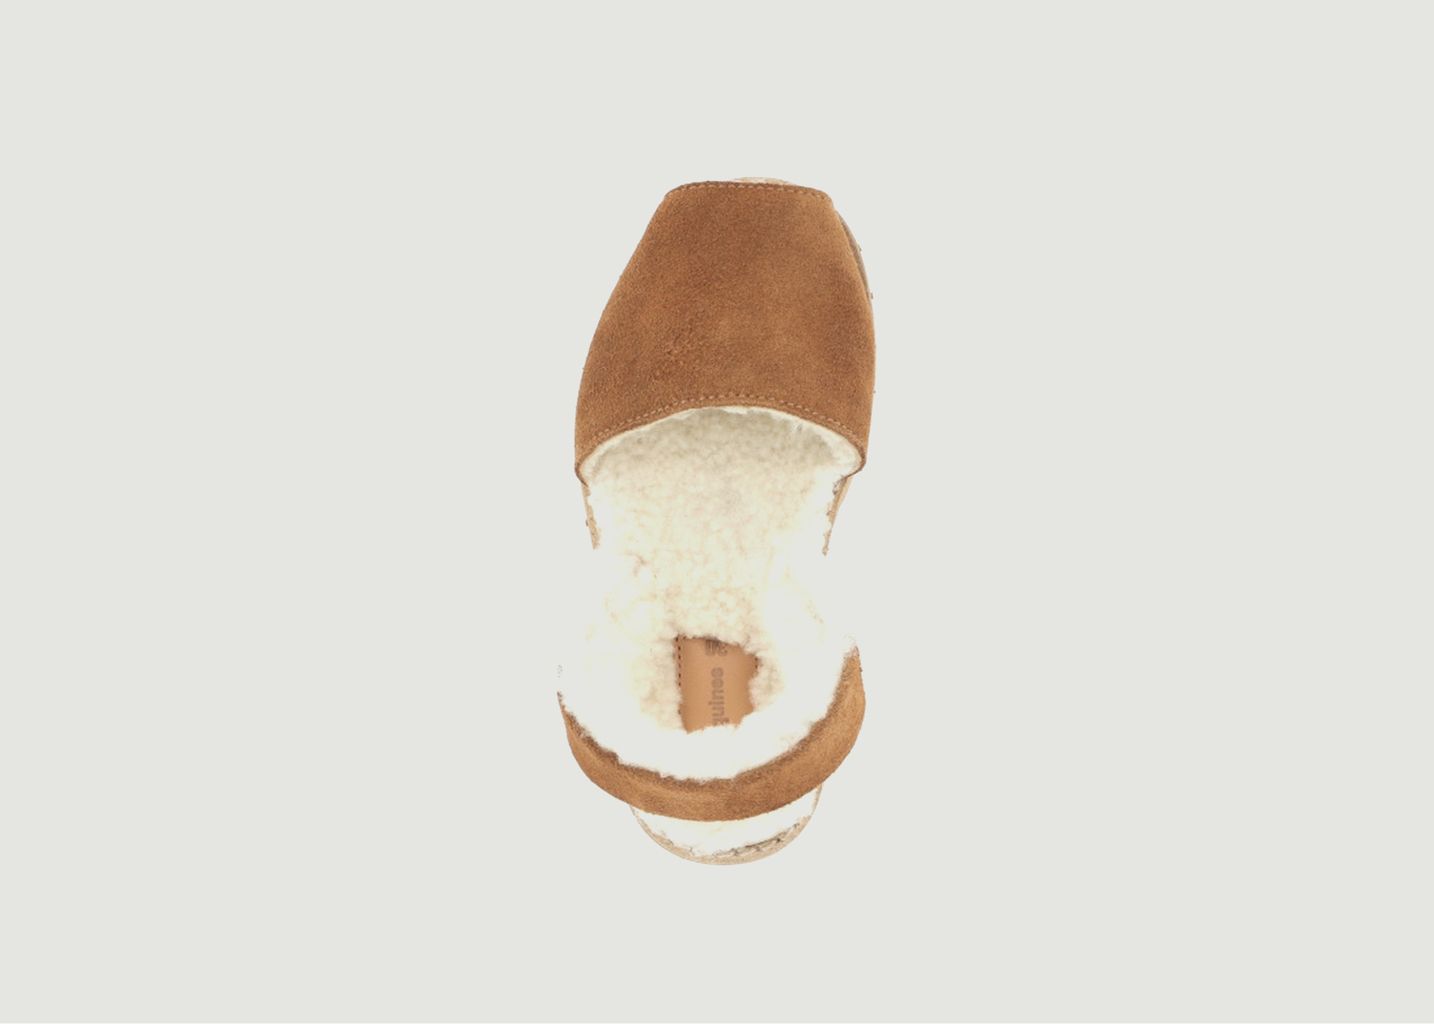 Sandals woolen skin Avarca - Minorquines